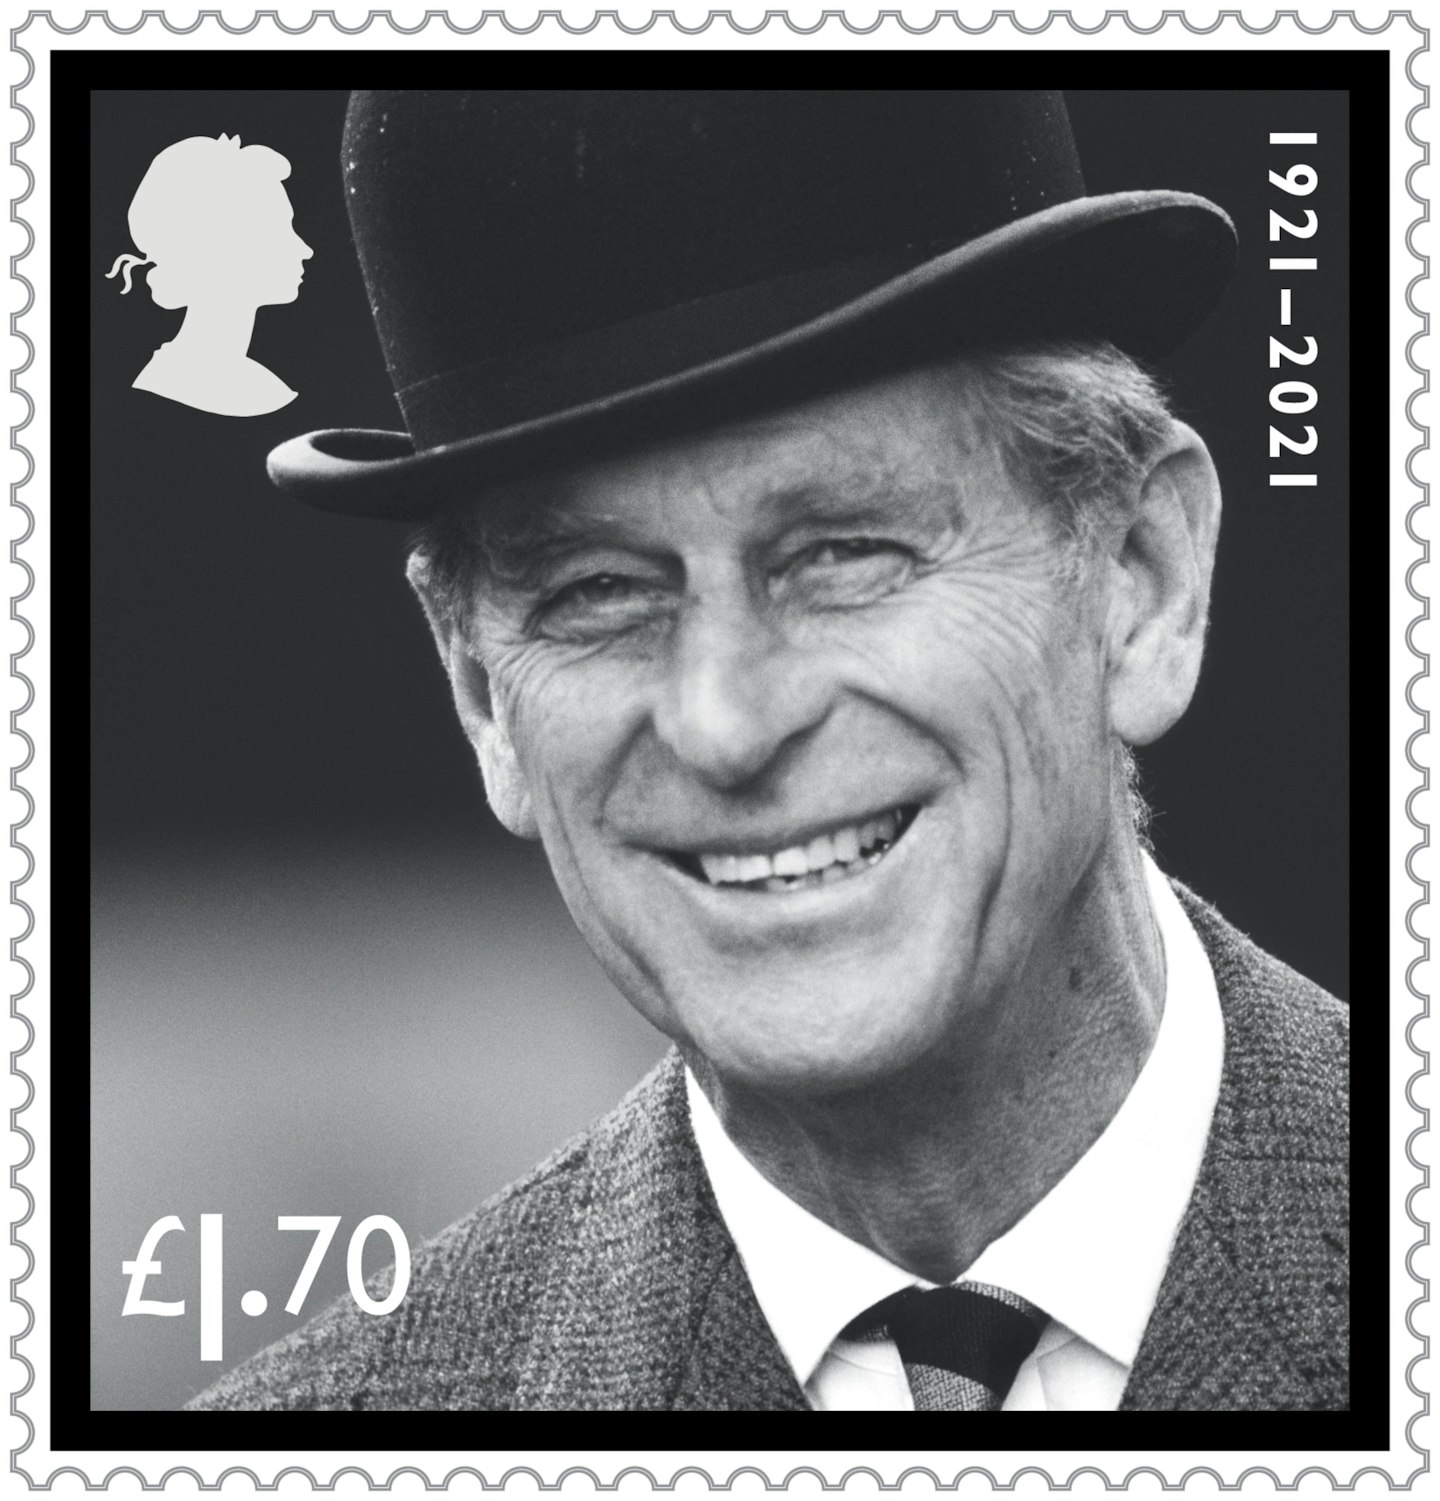 Prince Philip stamp 